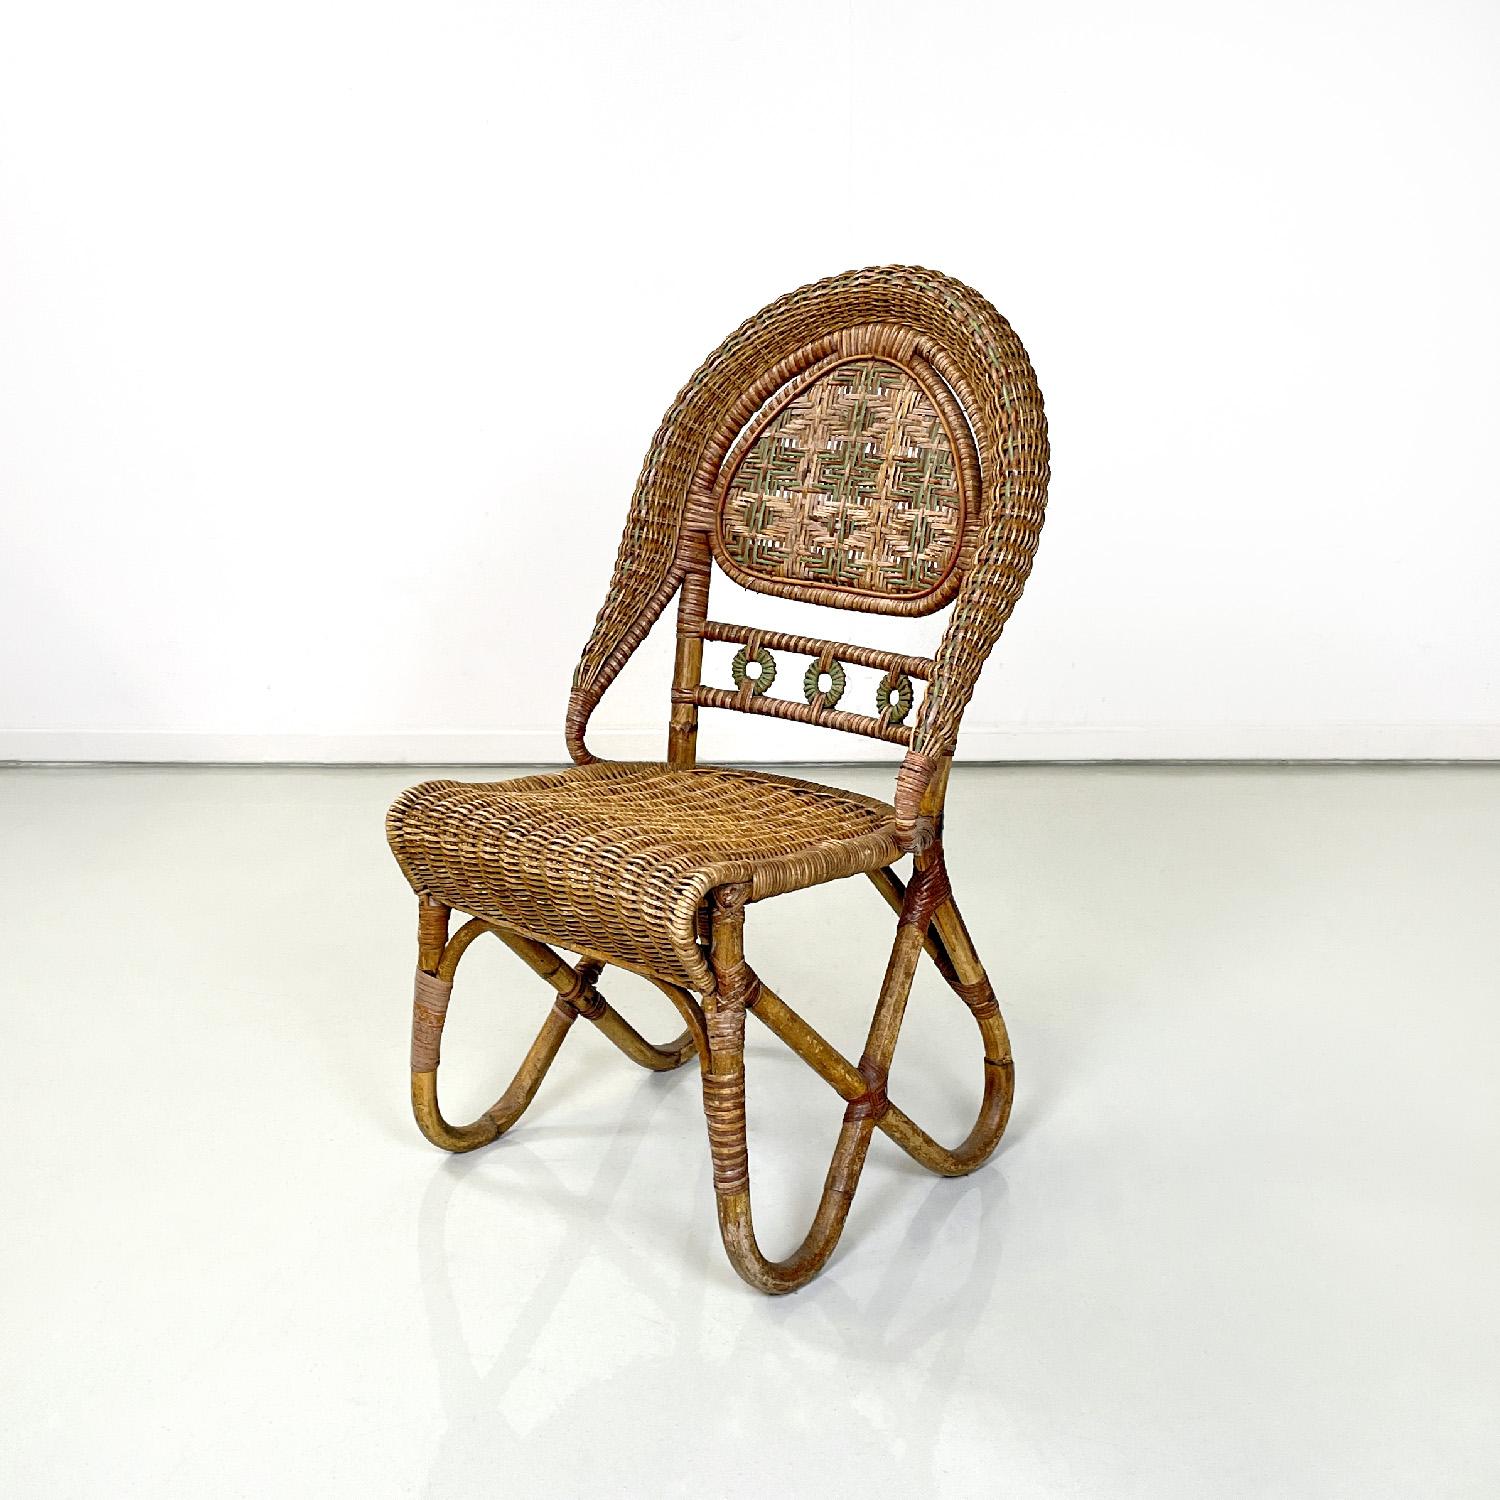 Early 20th Century Italiana antique rattan chairs by Mongiardino and Bonacina for Bonacina, 1900s For Sale